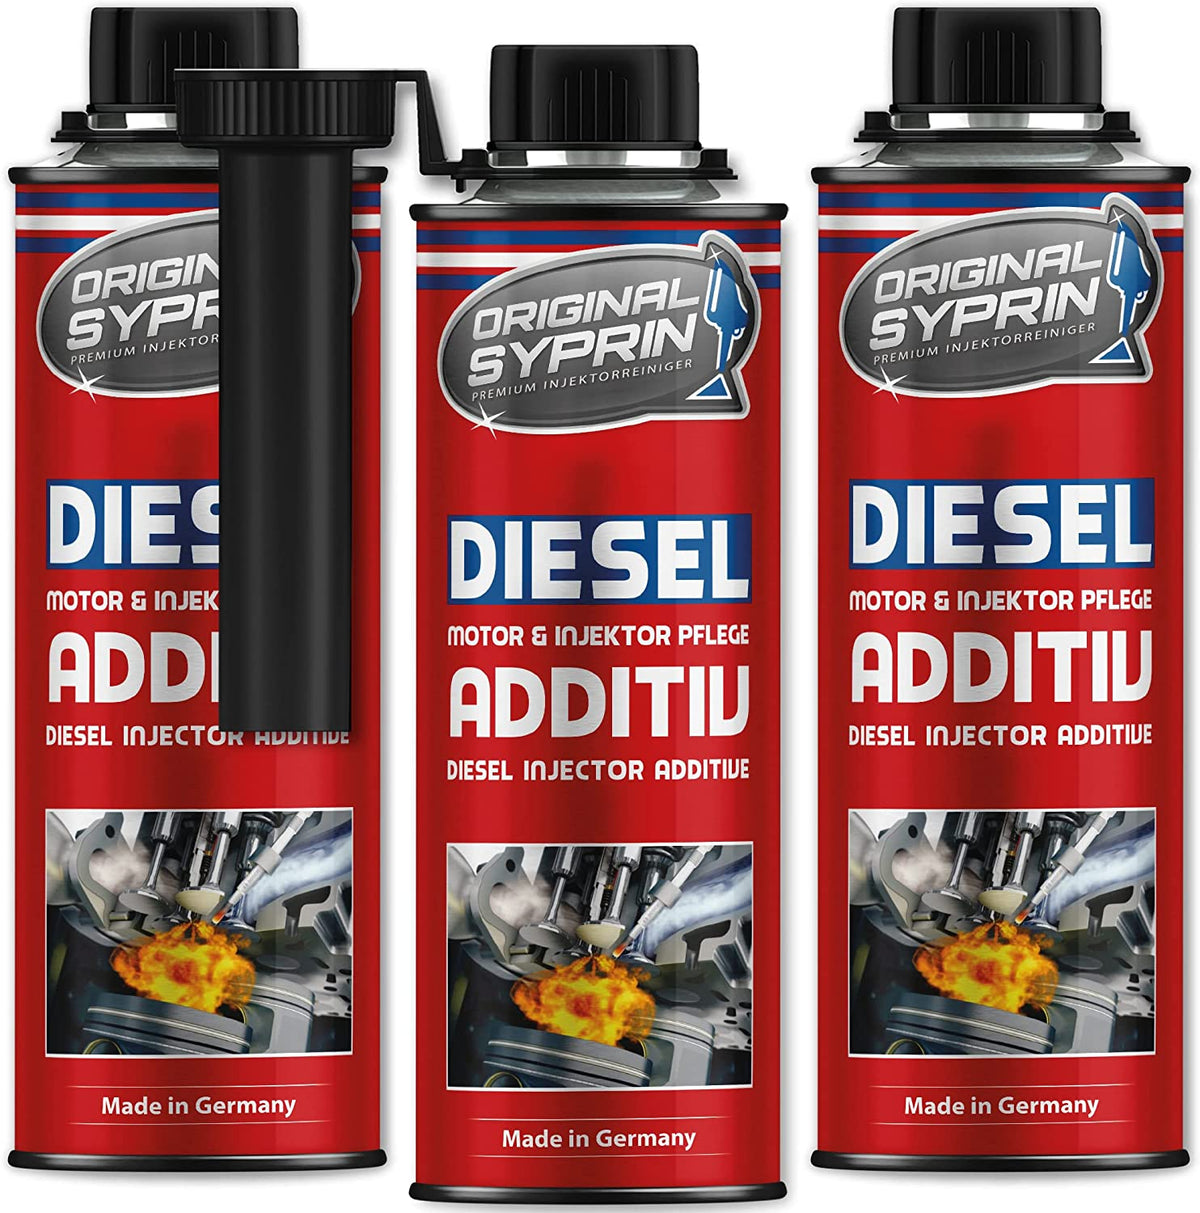 ORIGINAL SYPRIN Diesel Motorsystem & Injektor Pflege Additiv - Sparpaket 3x 250 ml - syprin